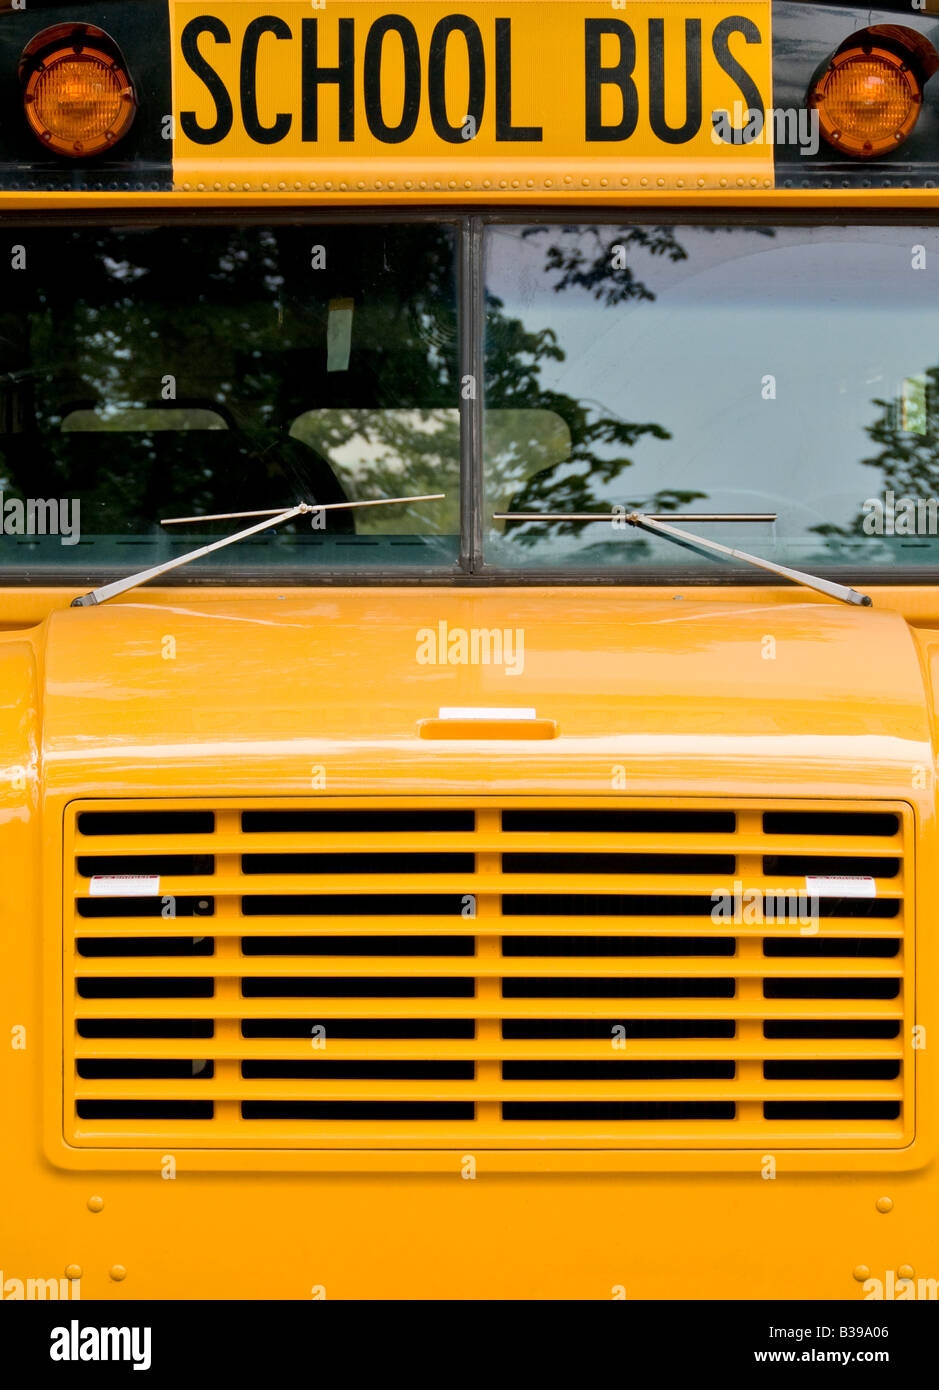 WASHINGTON DC, USA - American School Bus Stockfotografie - Alamy